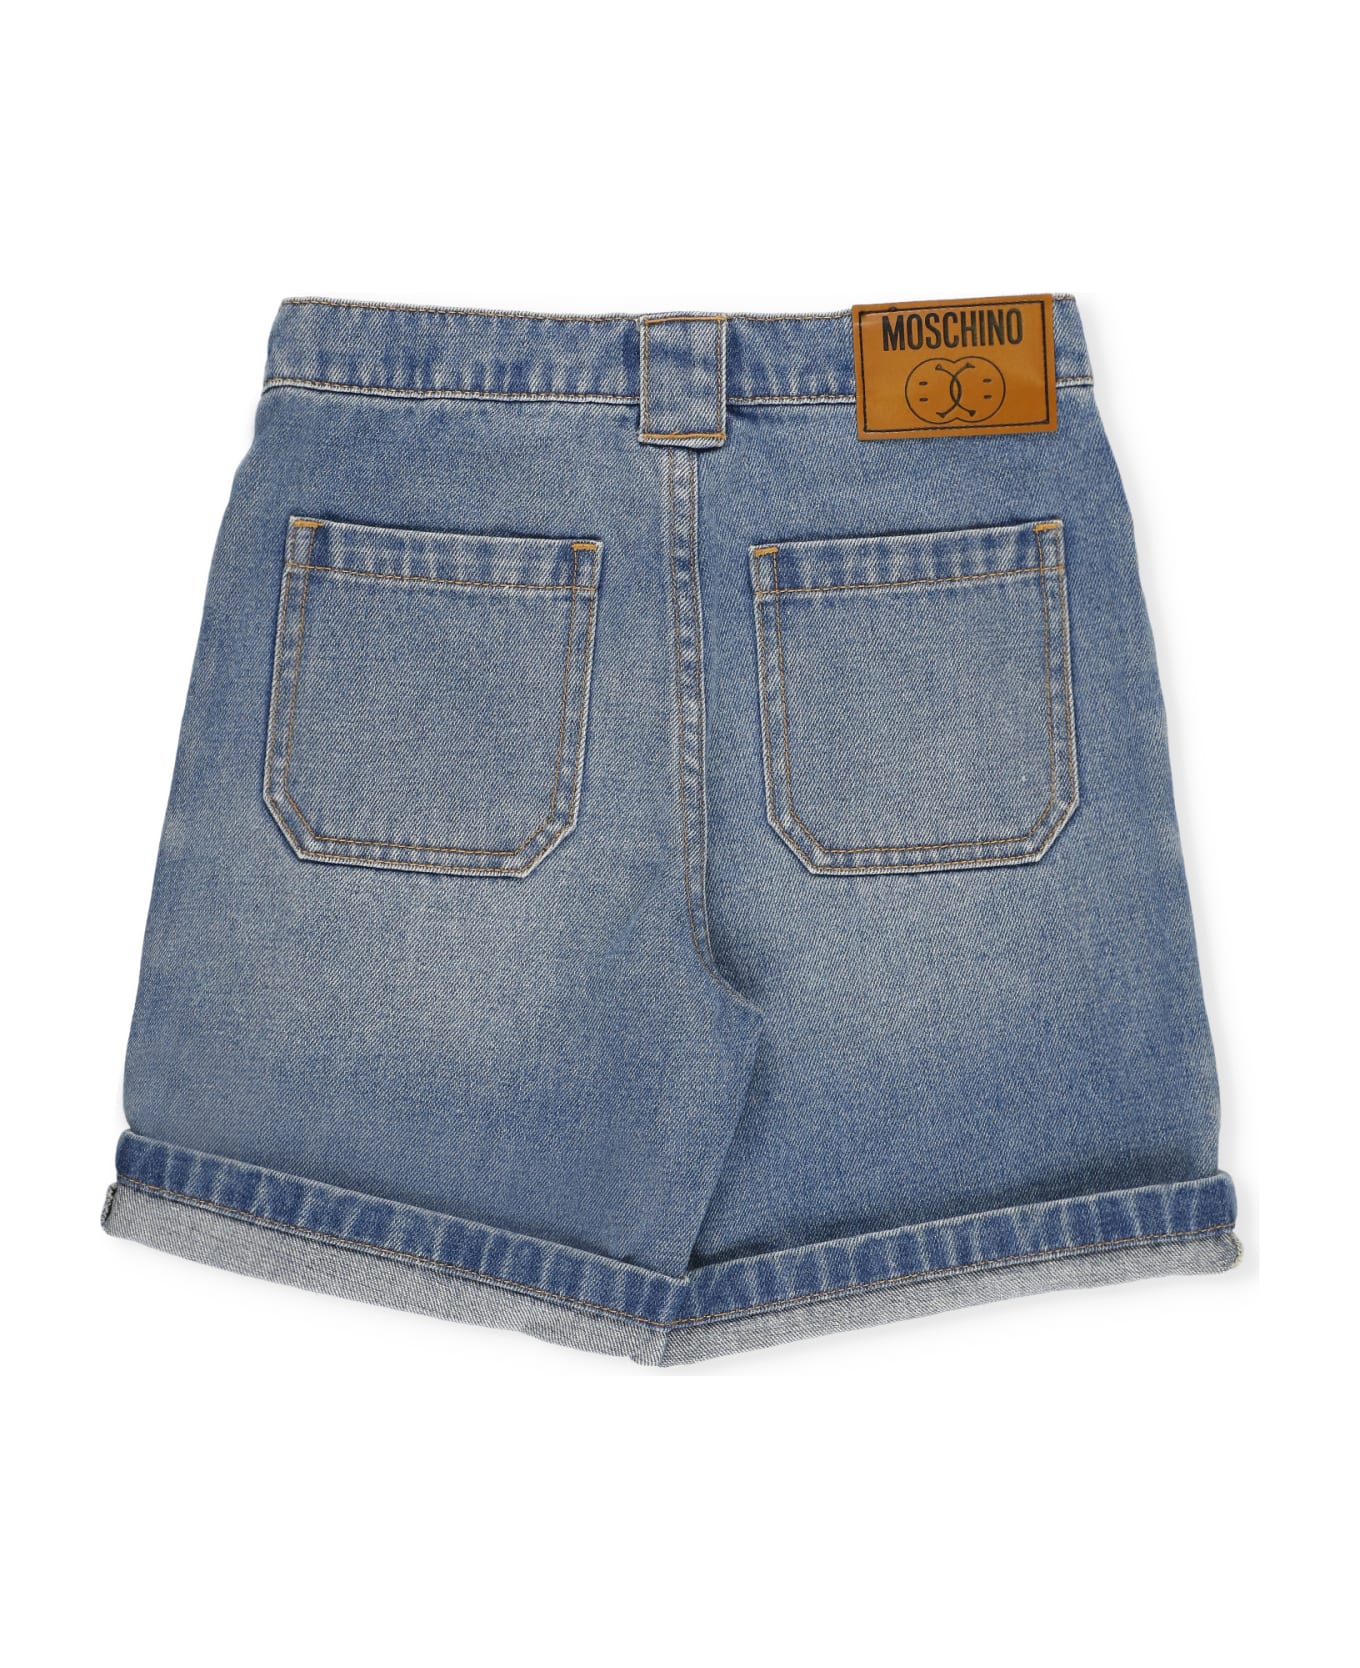 Moschino Cotton Shorts - Blue